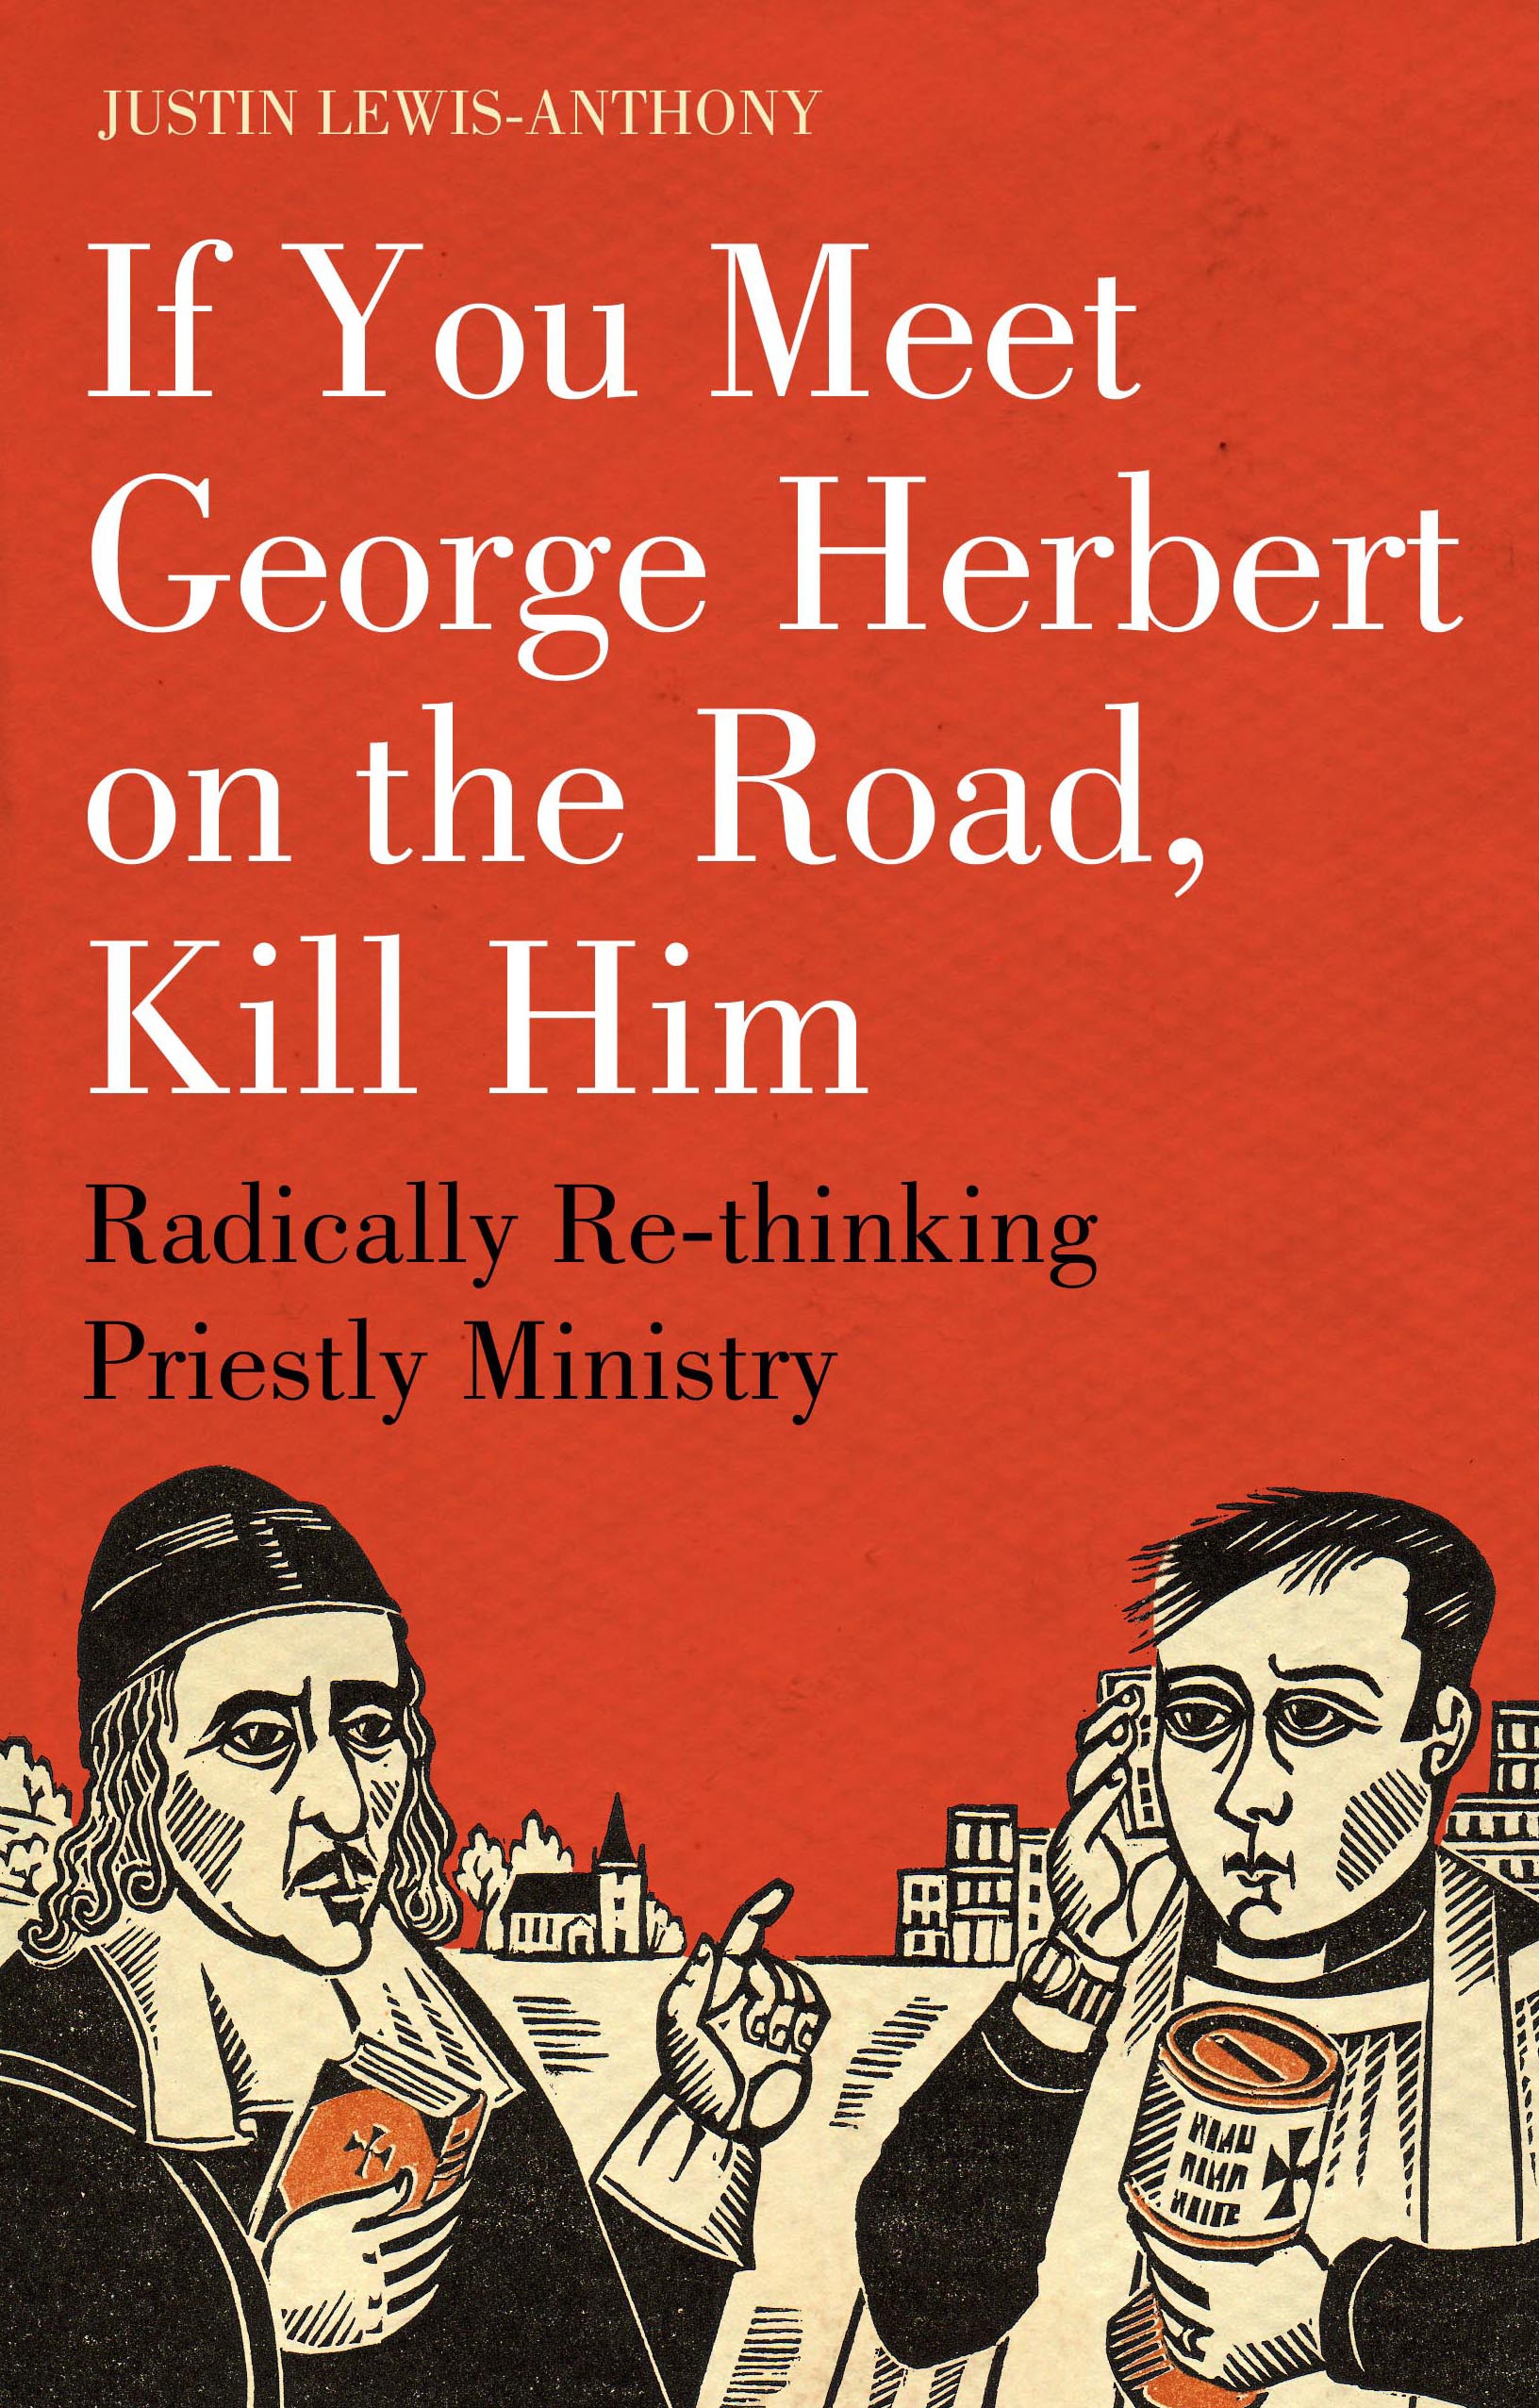 If you meet George Herbert on the road, kill him - 15-24.99